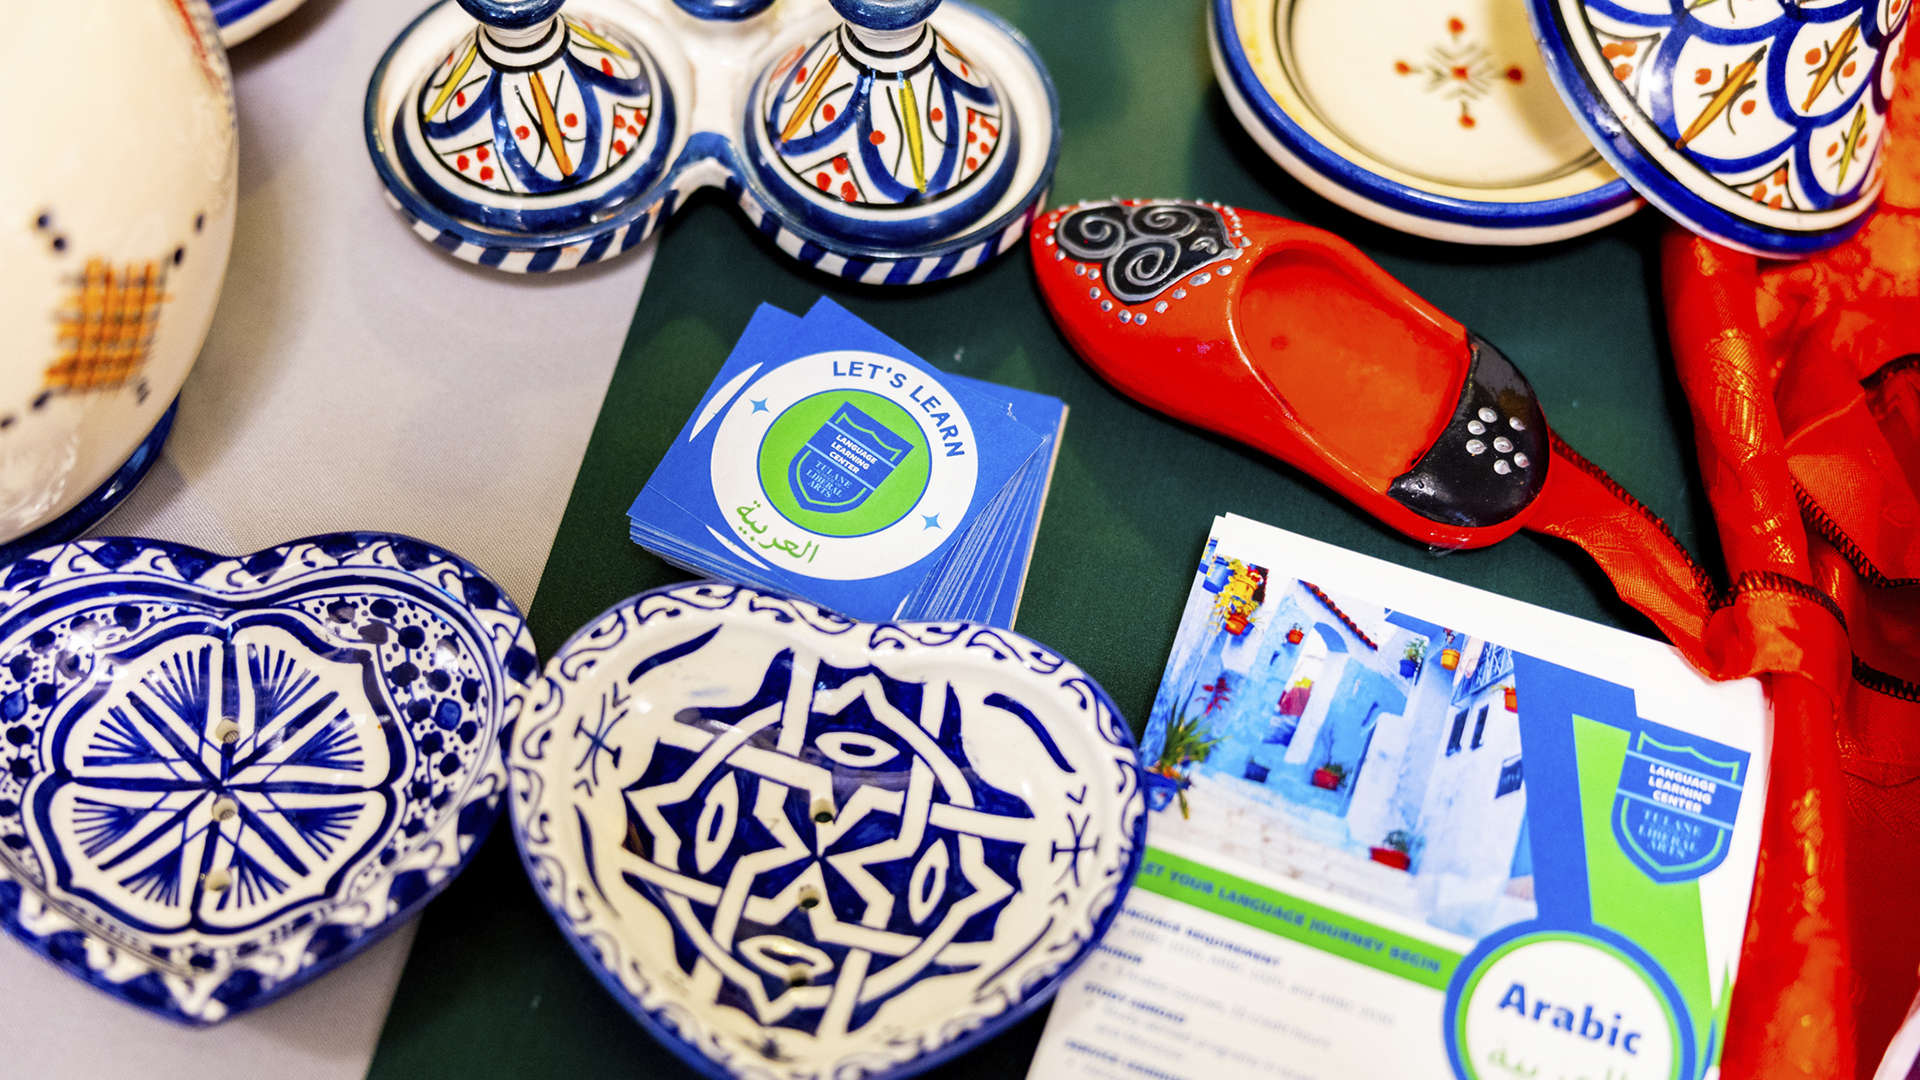 Arabic items on a table